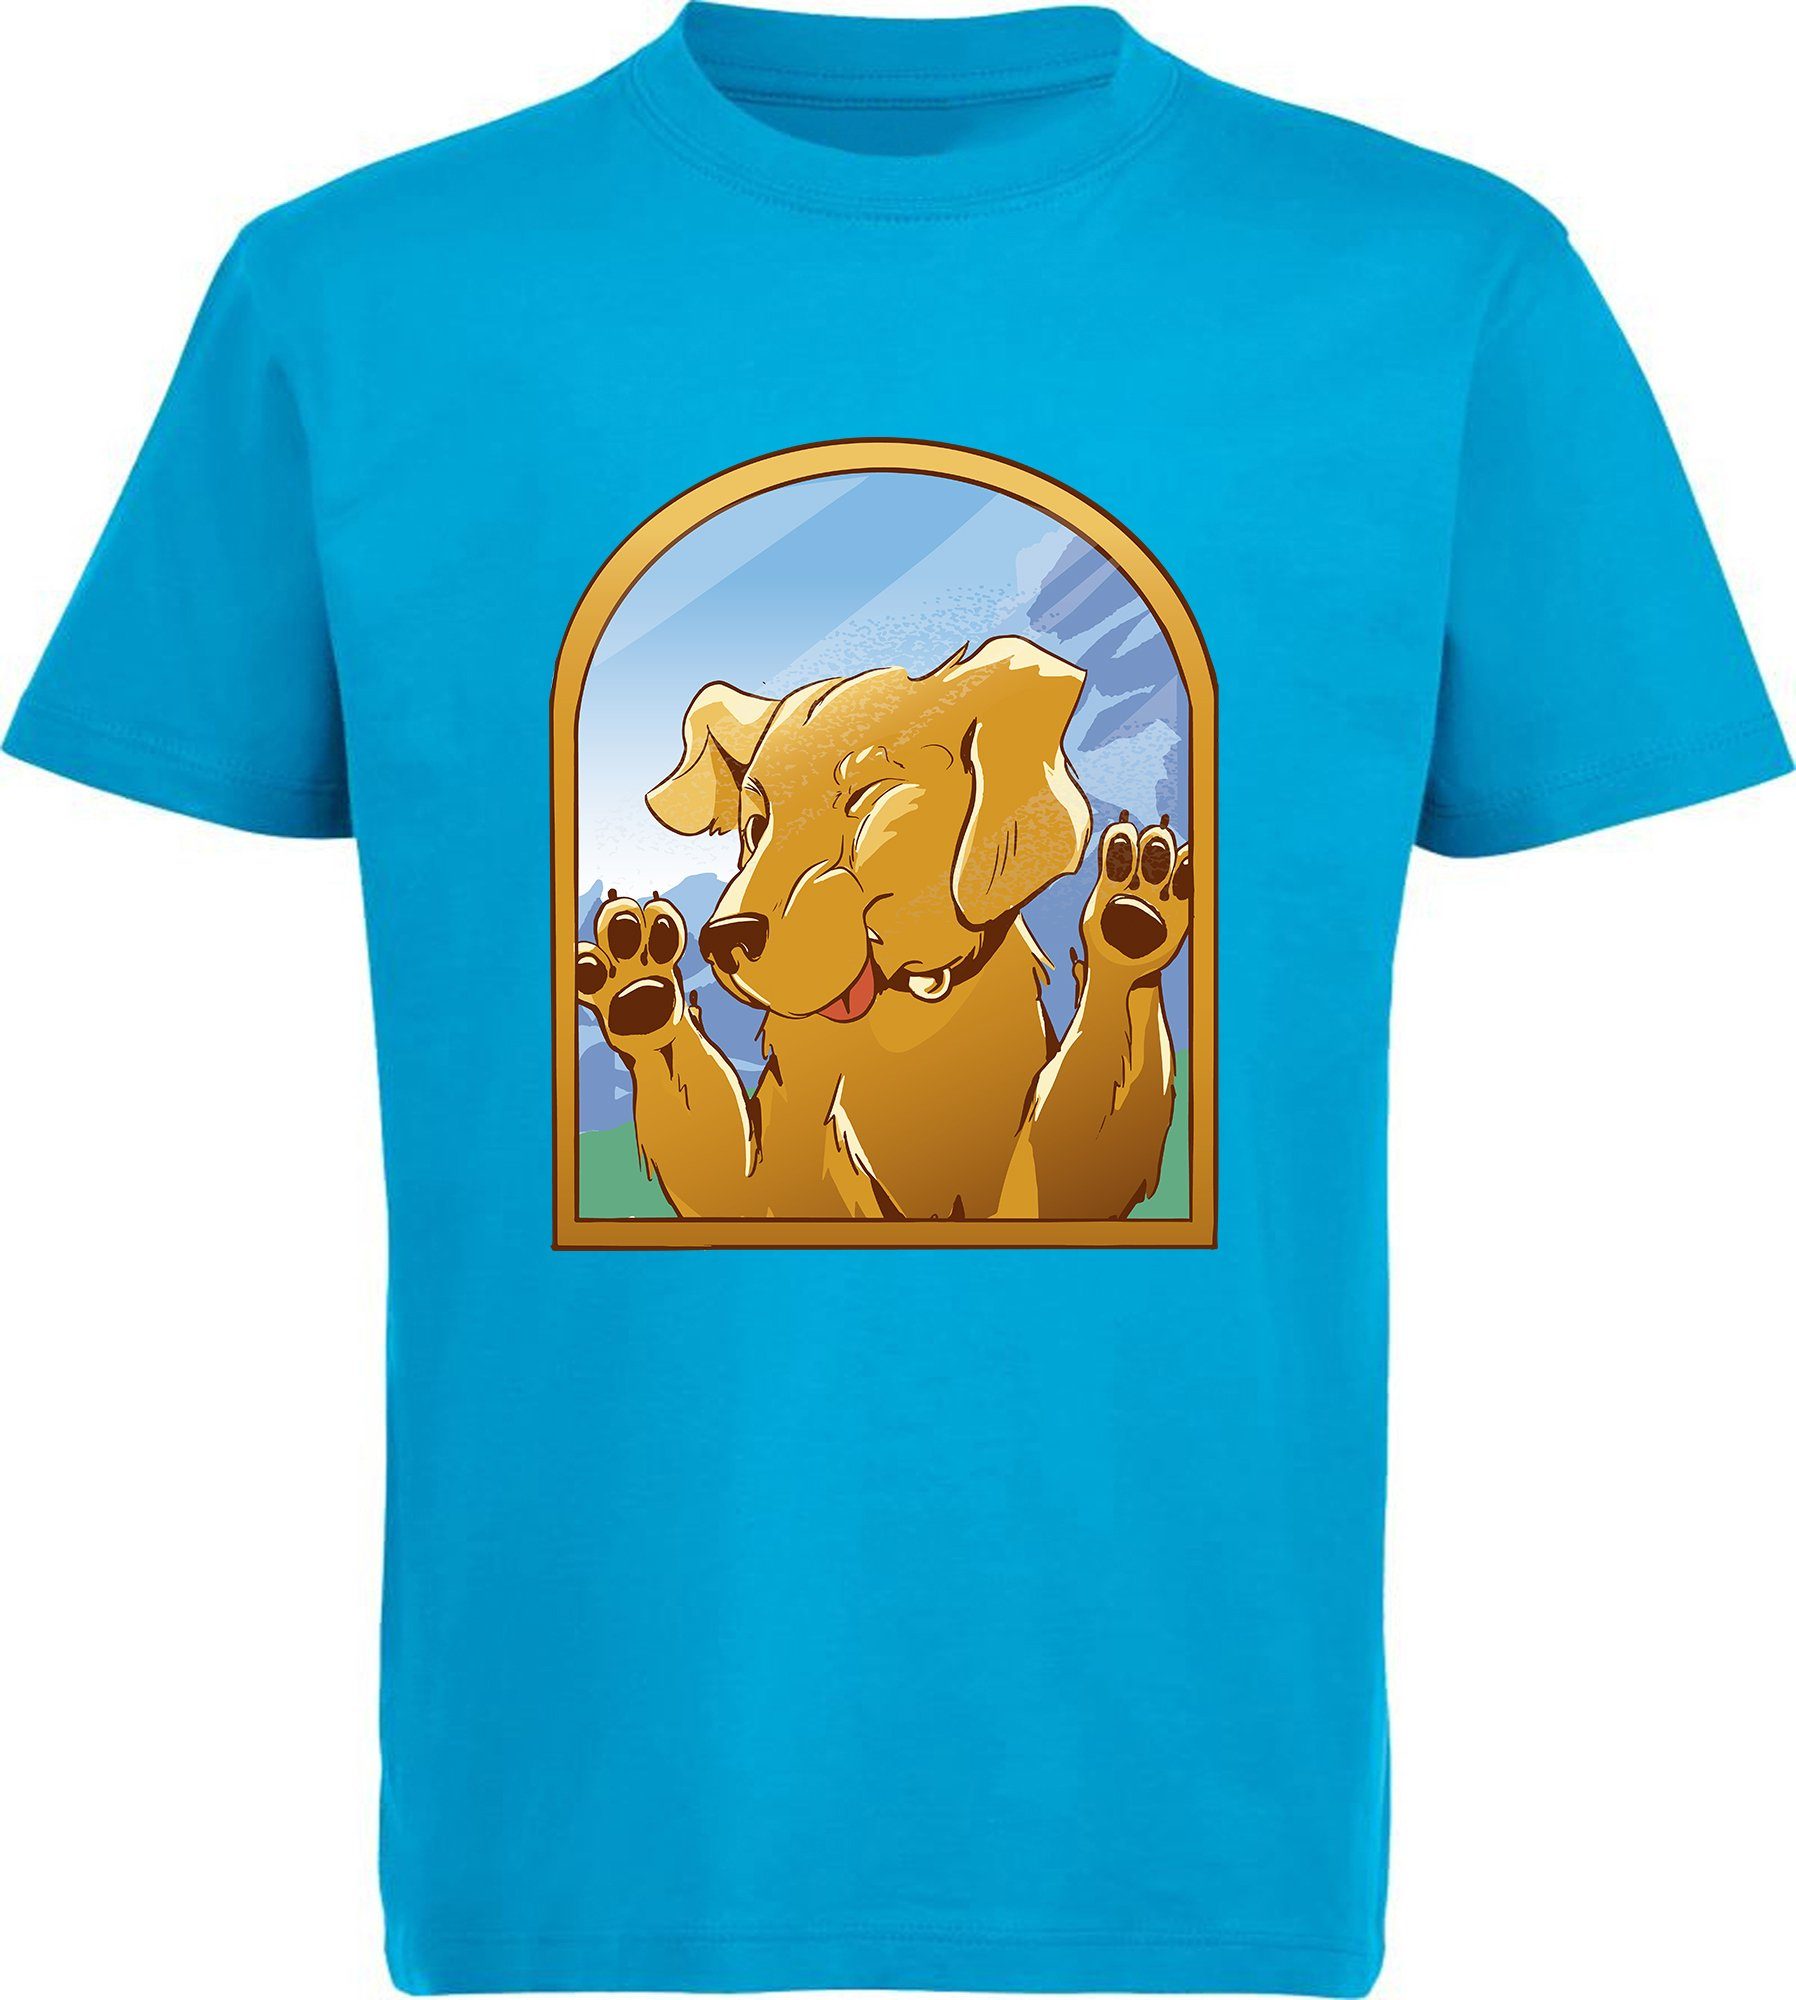 MyDesign24 Print-Shirt bedrucktes Kinder Hunde T-Shirt - Labrador gegen Fenster Baumwollshirt mit Aufdruck, i222 aqua blau